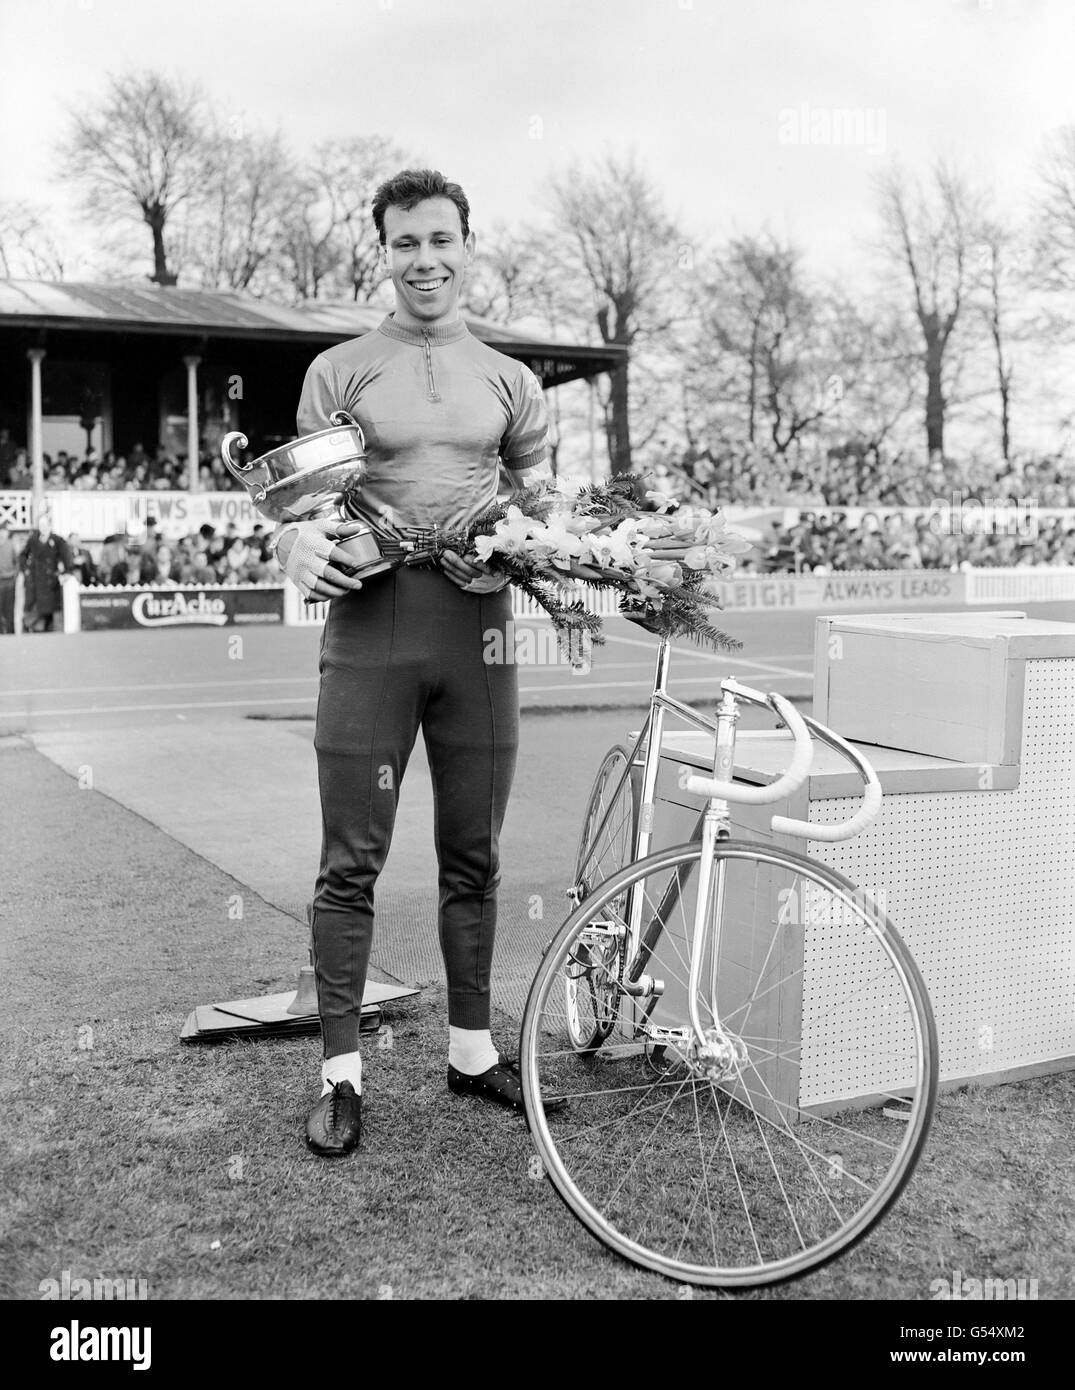 Barry Hoban (Wakefield), the British 4,000 Metres champion, who won the  Nine Laps Pursuit Stock Photo - Alamy